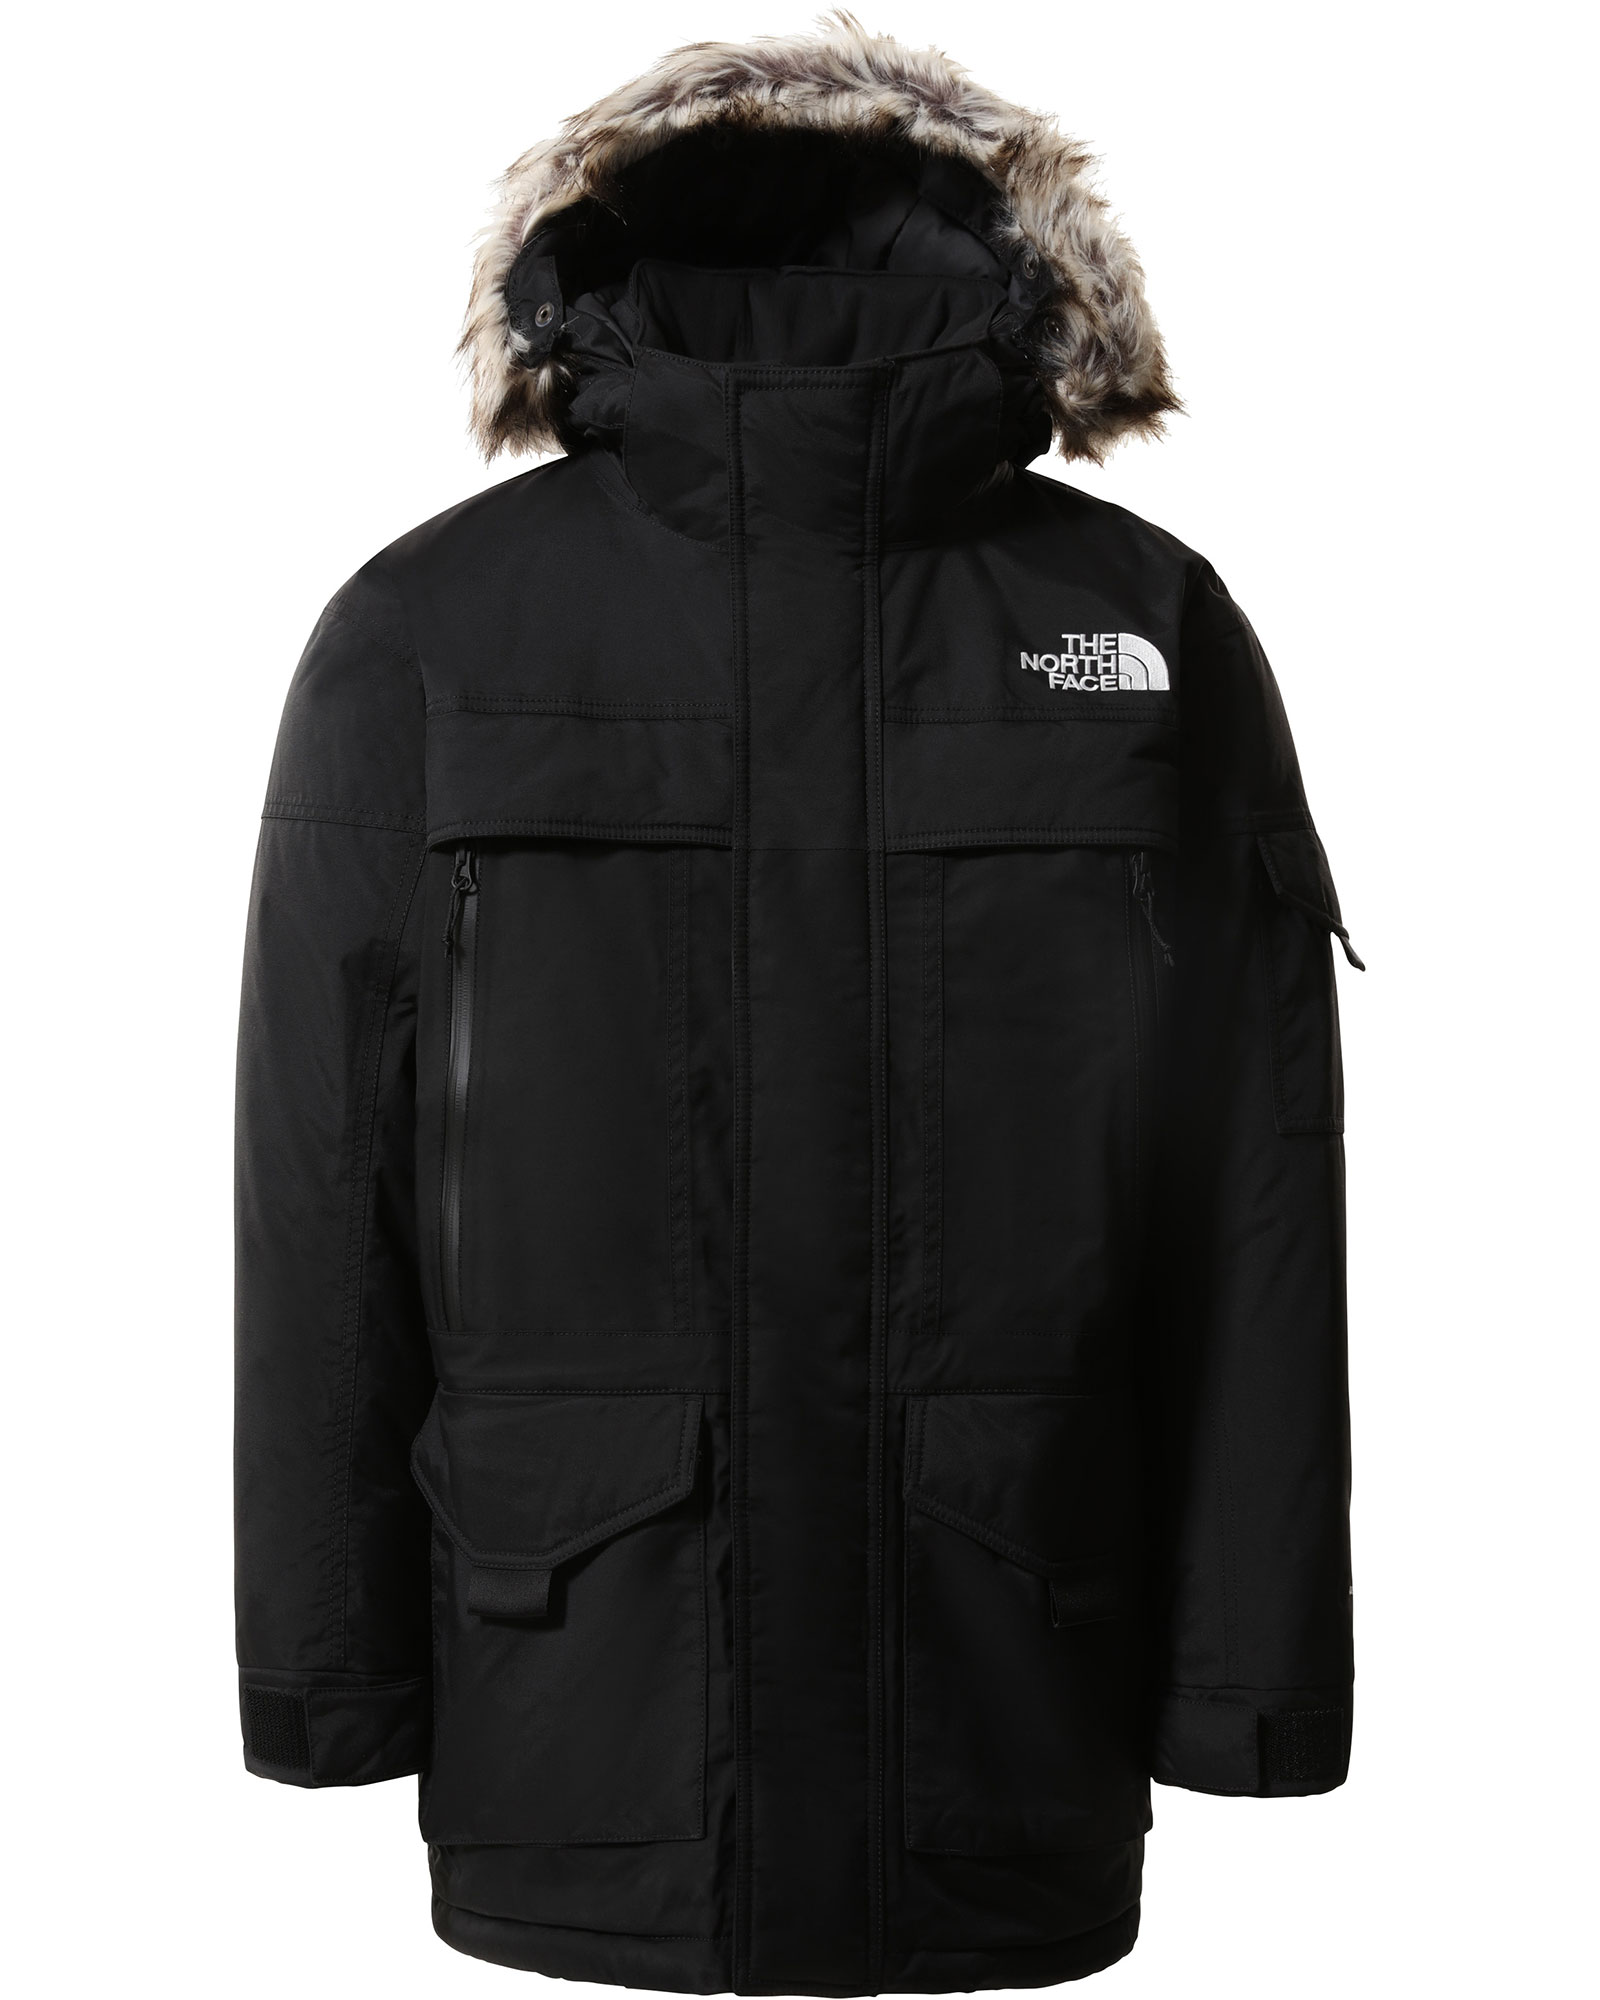 The North Face McMurdo 2 Men’s Parka Jacket - TNF Black/TNF White Logo L